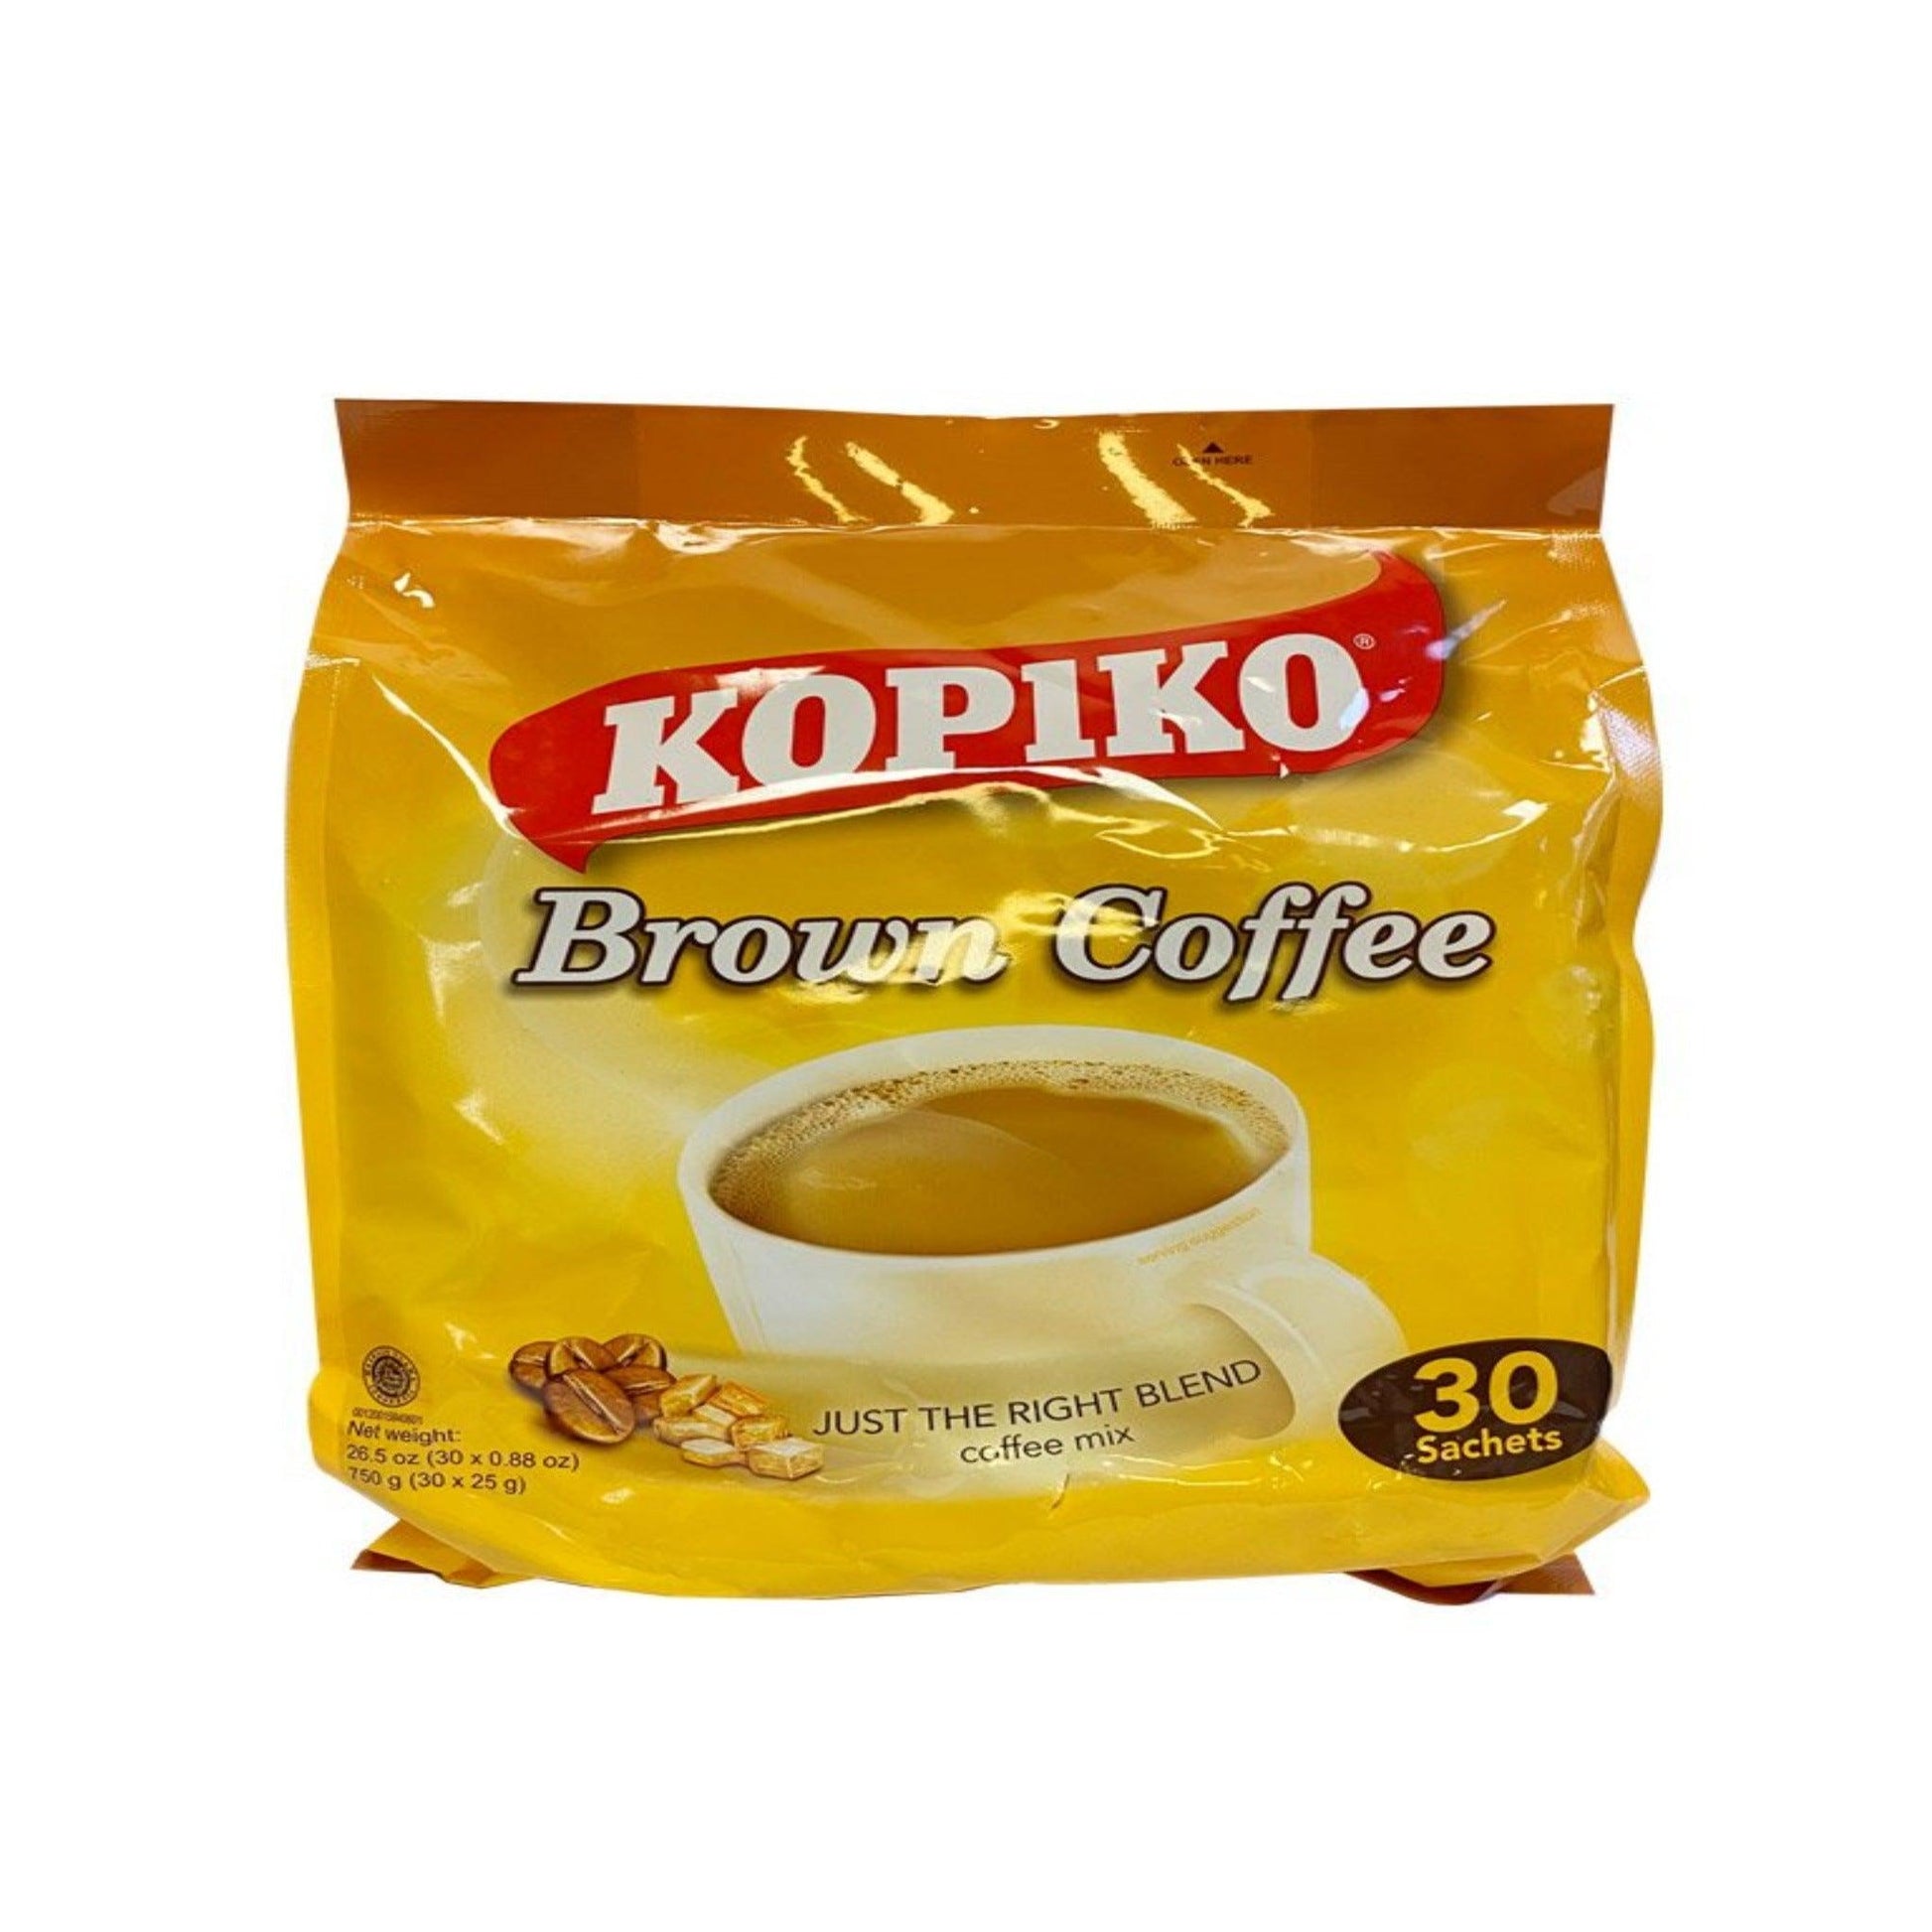 Kopiko Coffee Mix 30 Pack - Brown Coffee 26.5oz - Just Asian Food